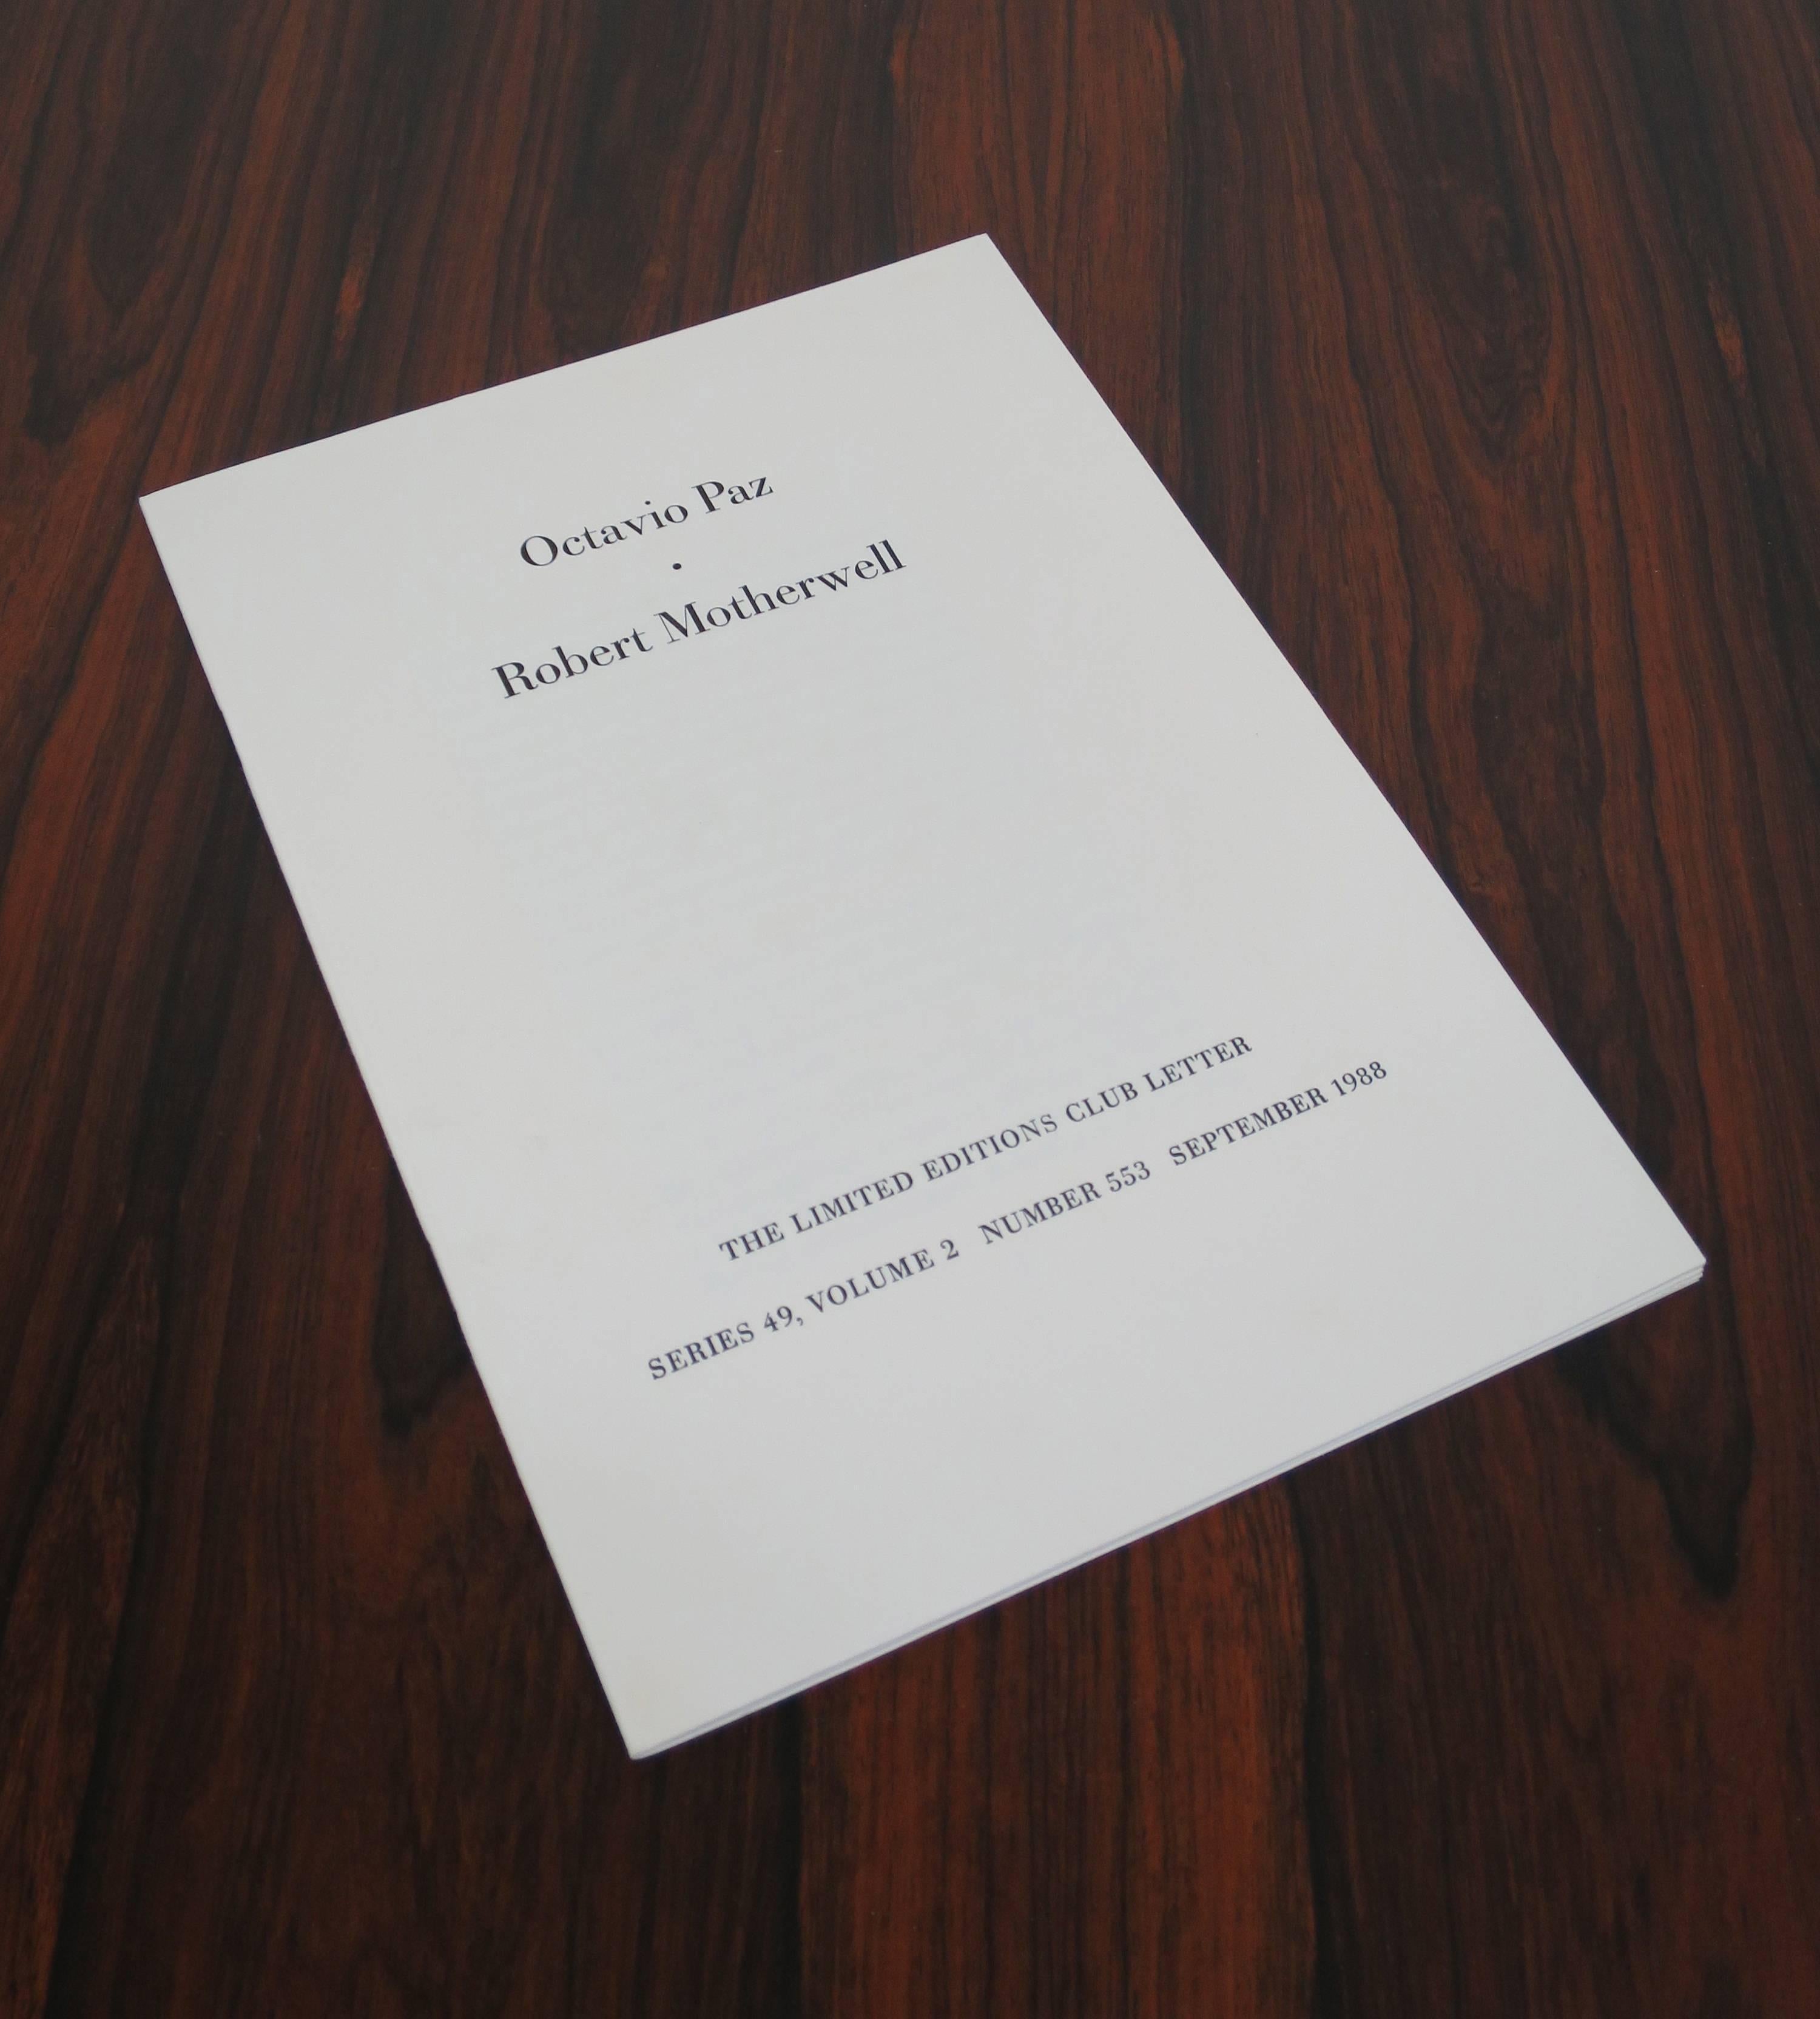 Robert Motherwell, Octavio Paz, Three Poems Lithograph Coffee Table Book 2